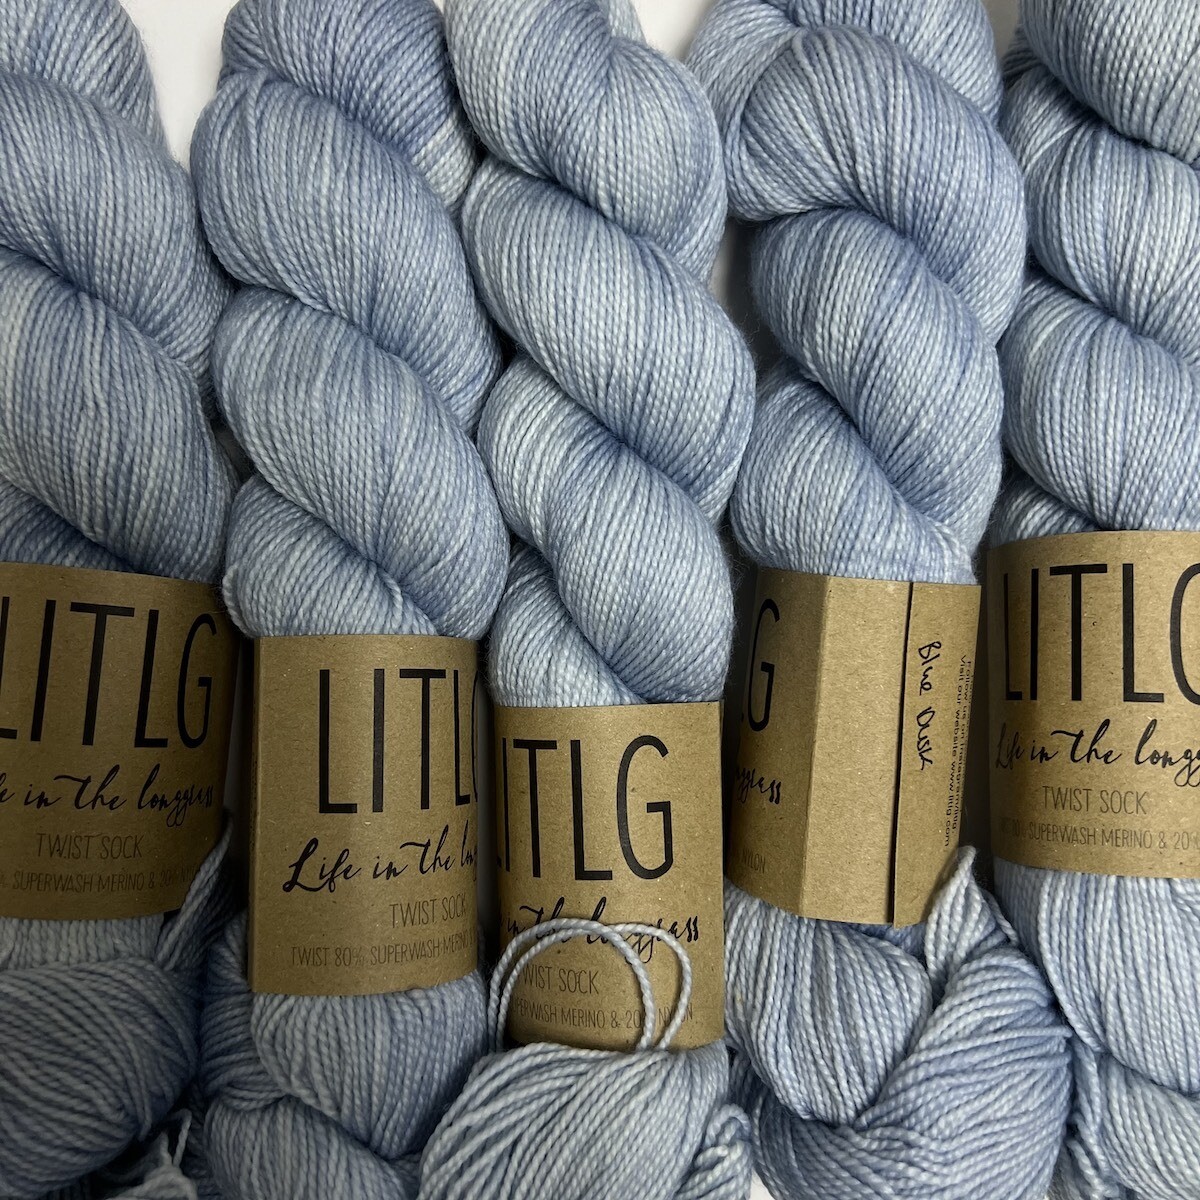 LITLG twist sock yarn Blue dusk